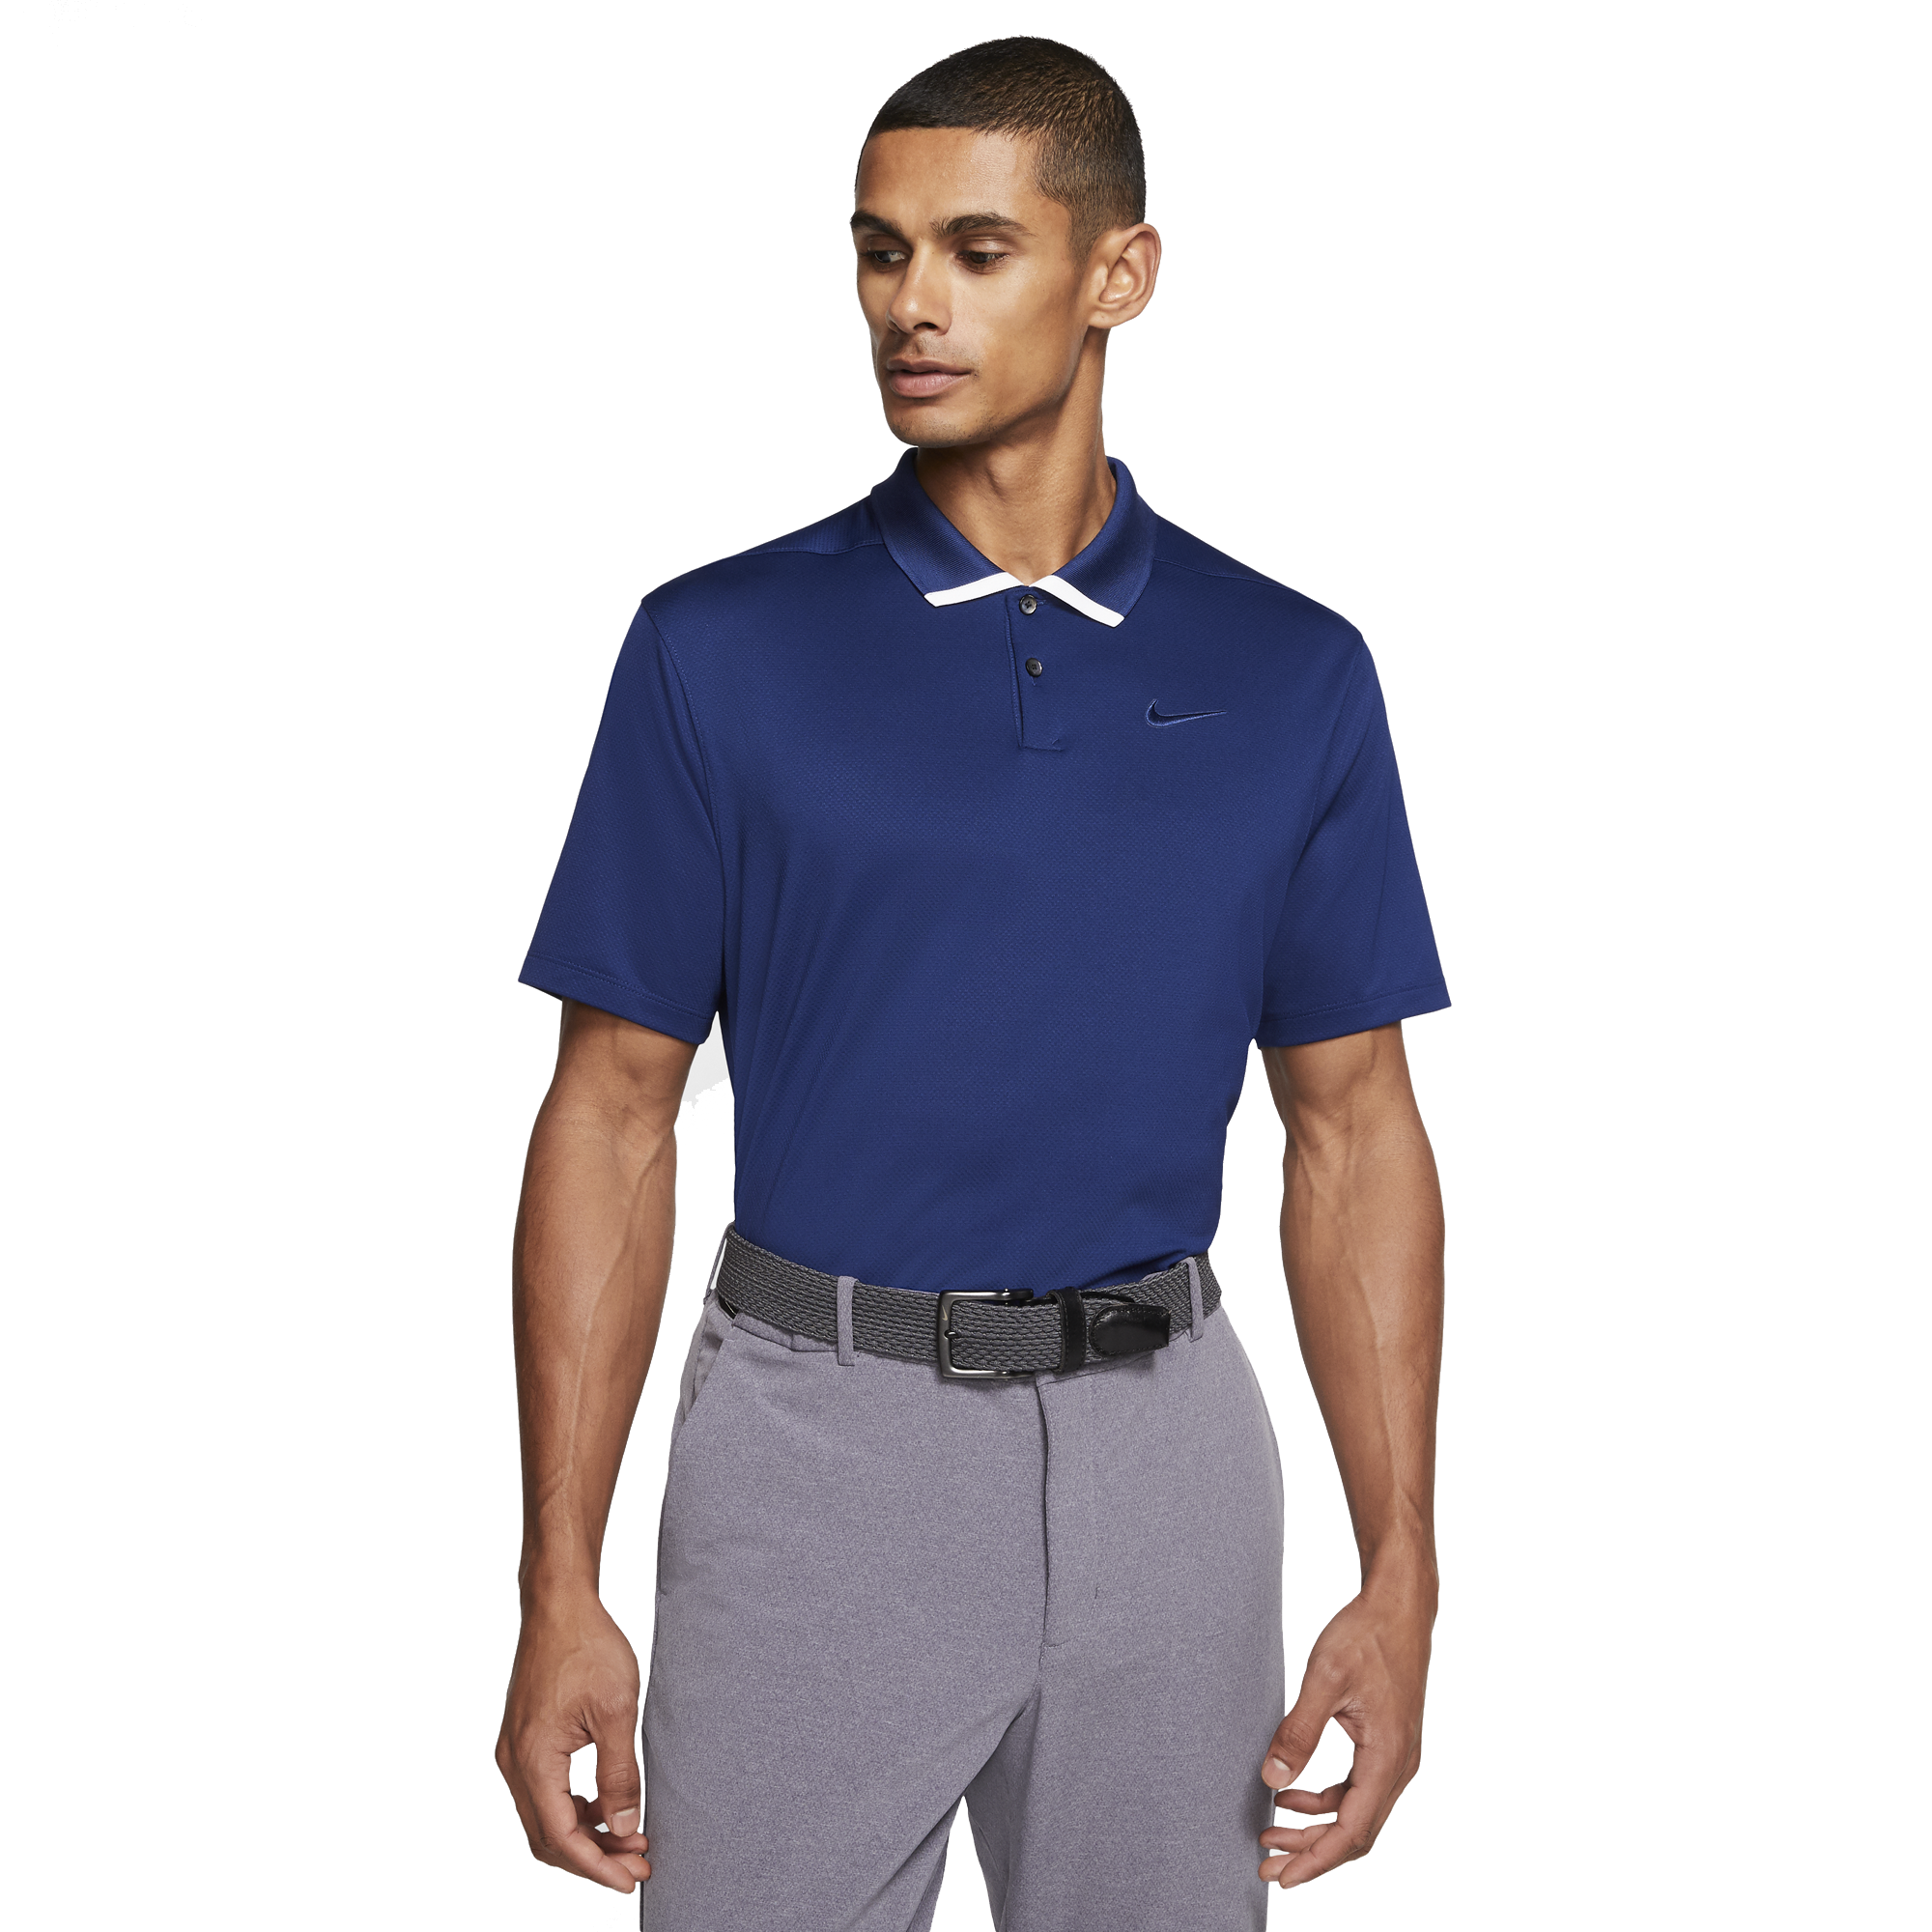 Barstool Chicago Golf Nike Polo | Barstool Chicago Navy